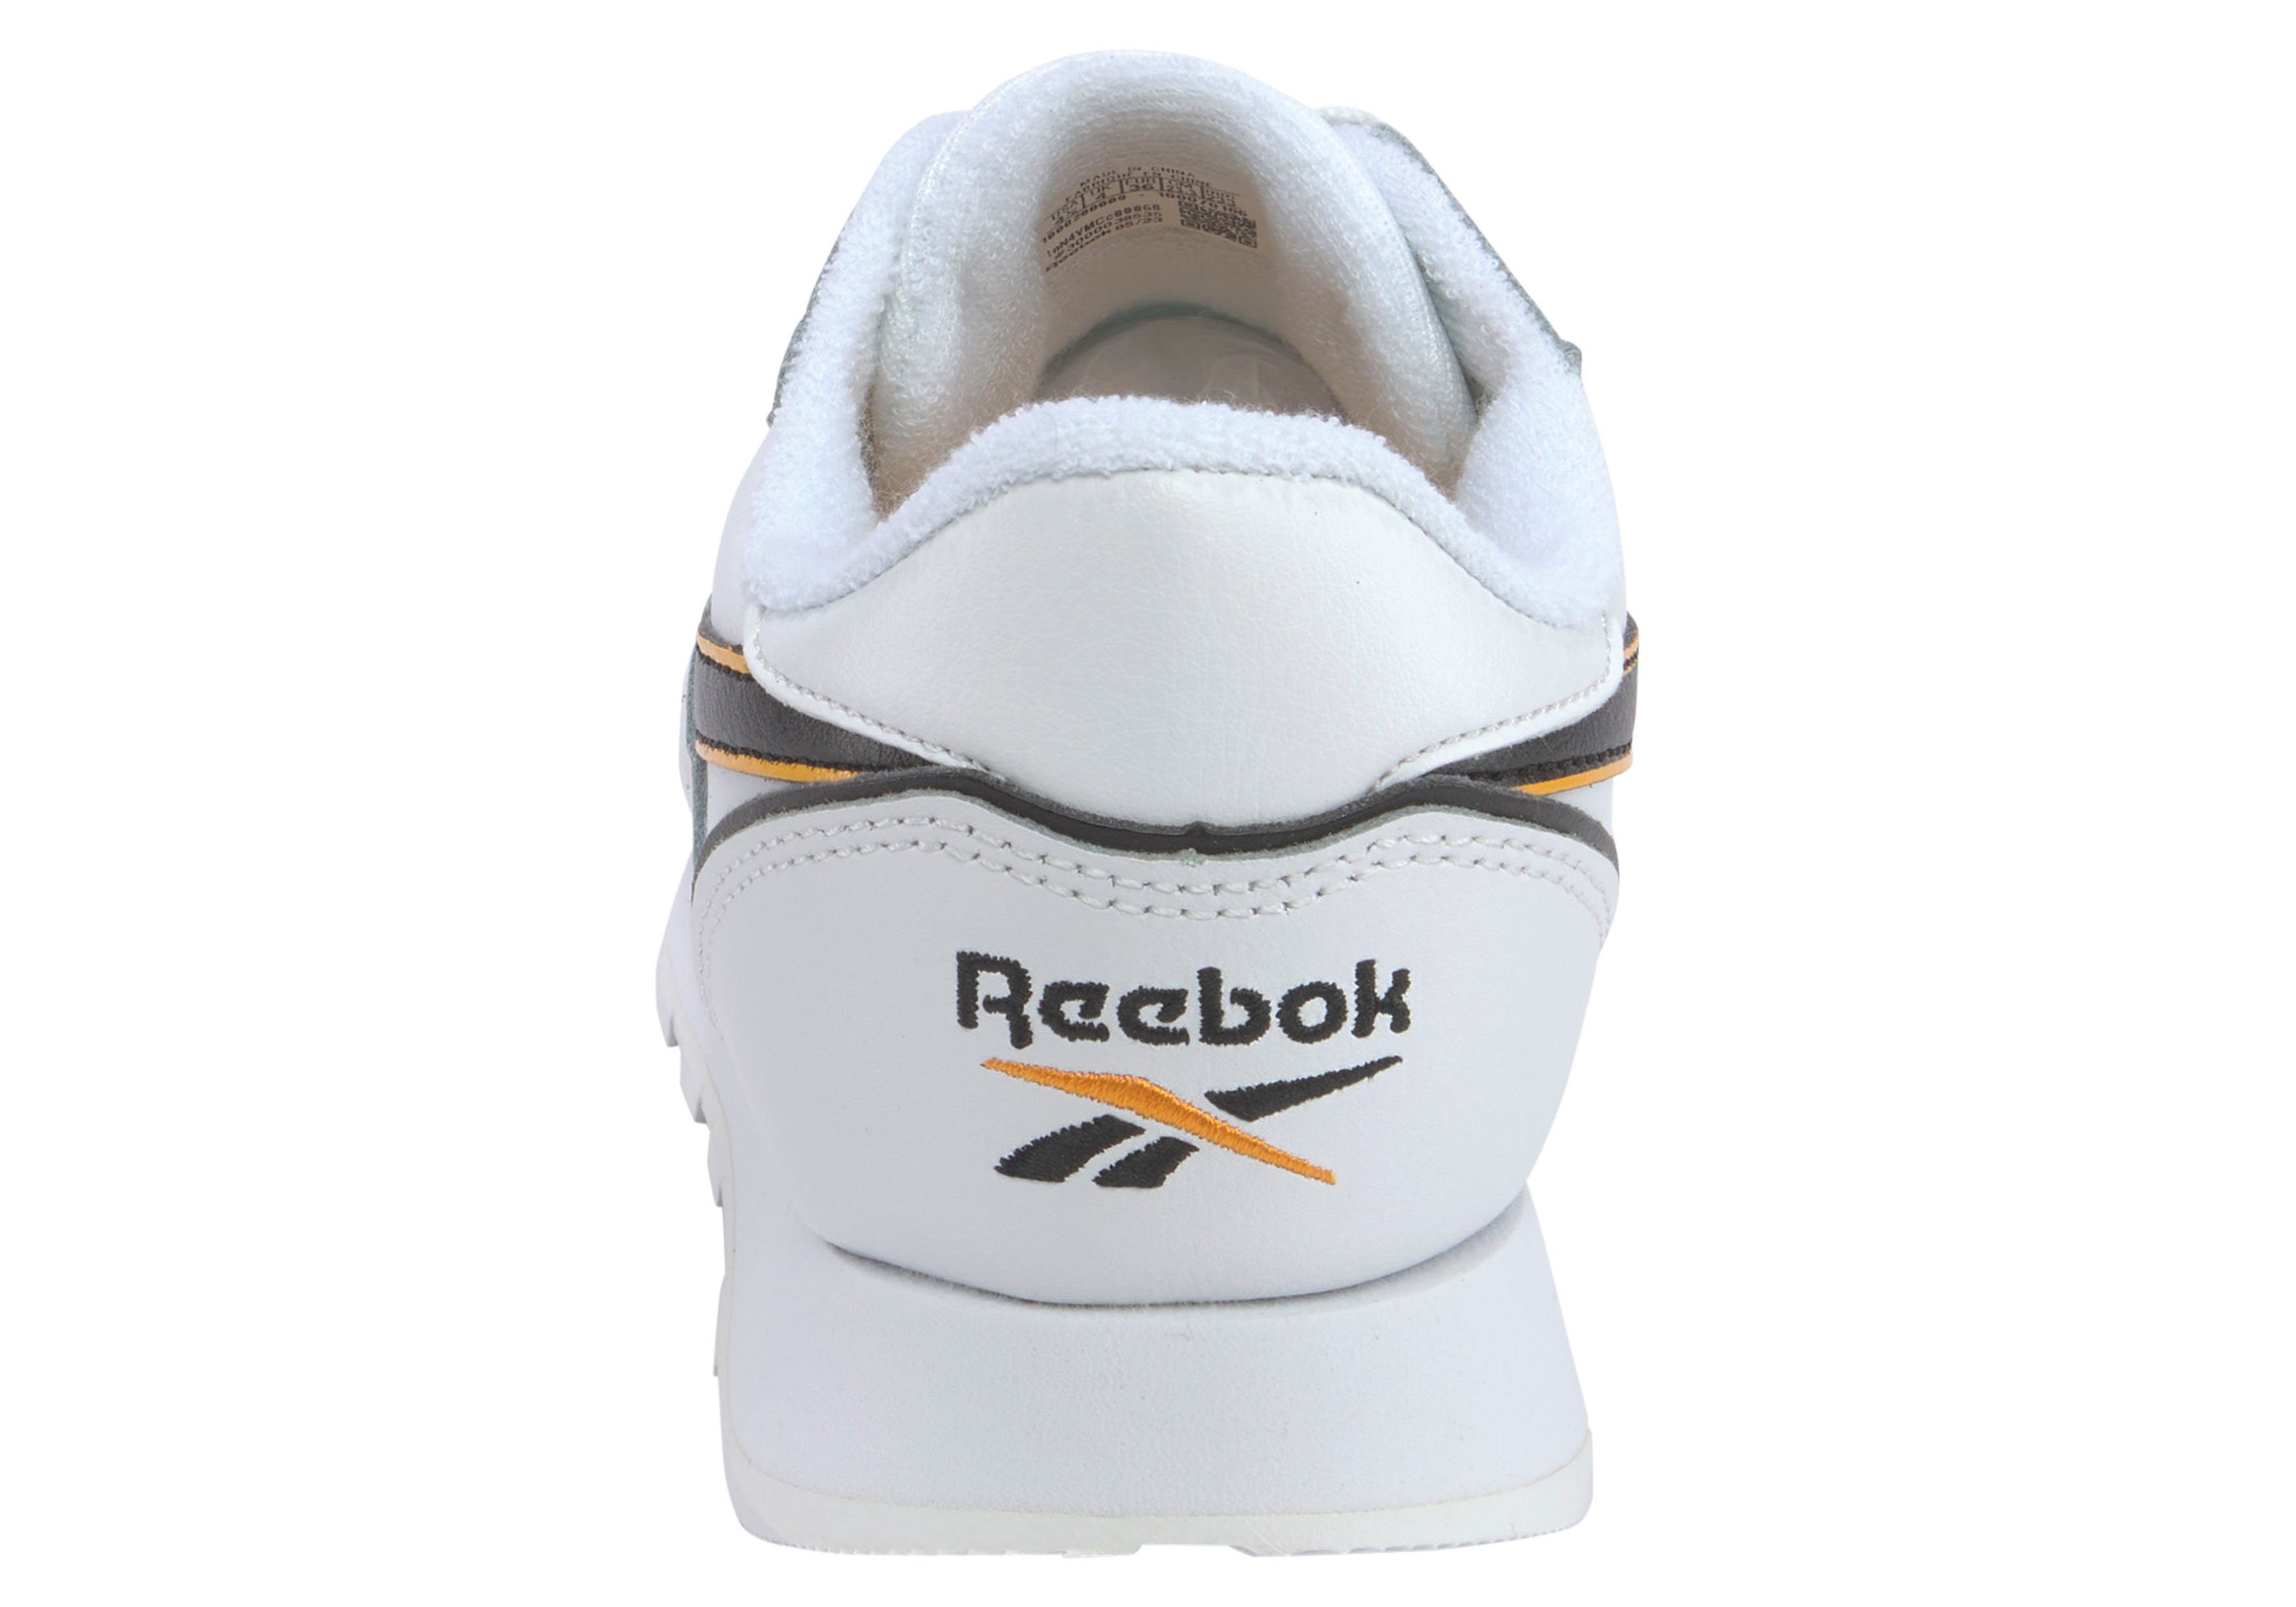 LEATHER Sneaker Classic multi CLASSIC Reebok